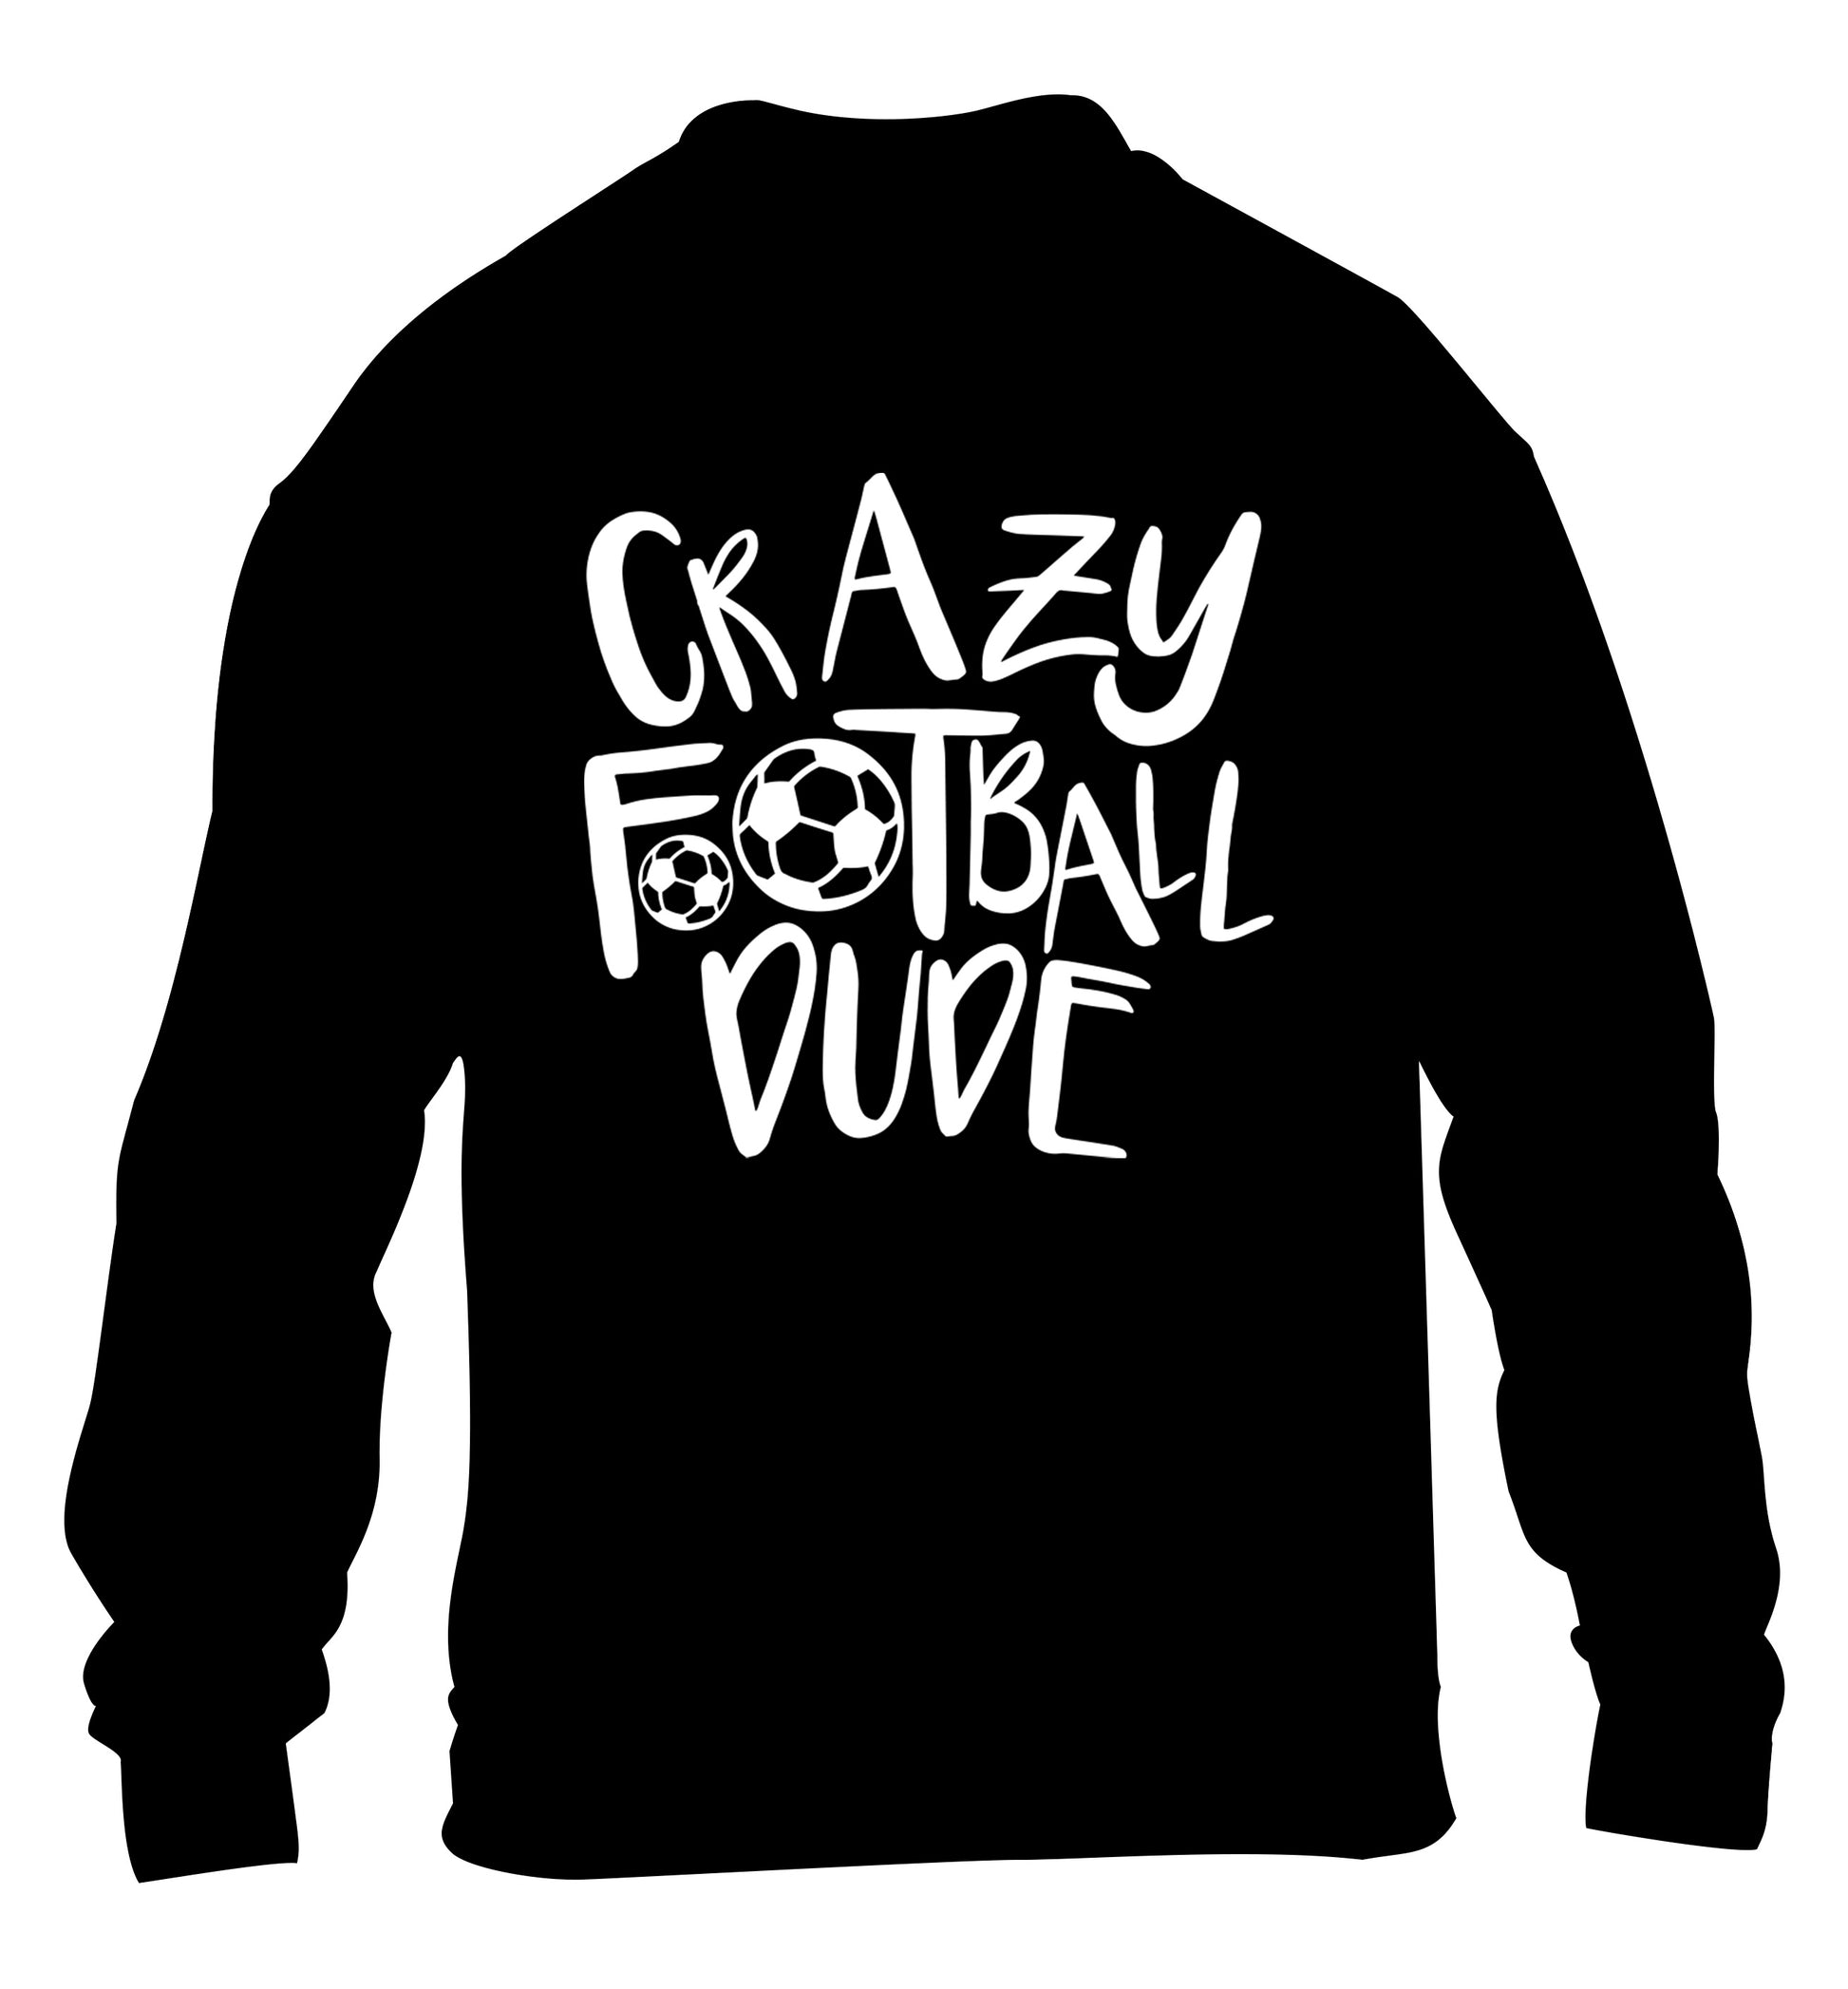 Crazy football dude children's black sweater 12-14 Years